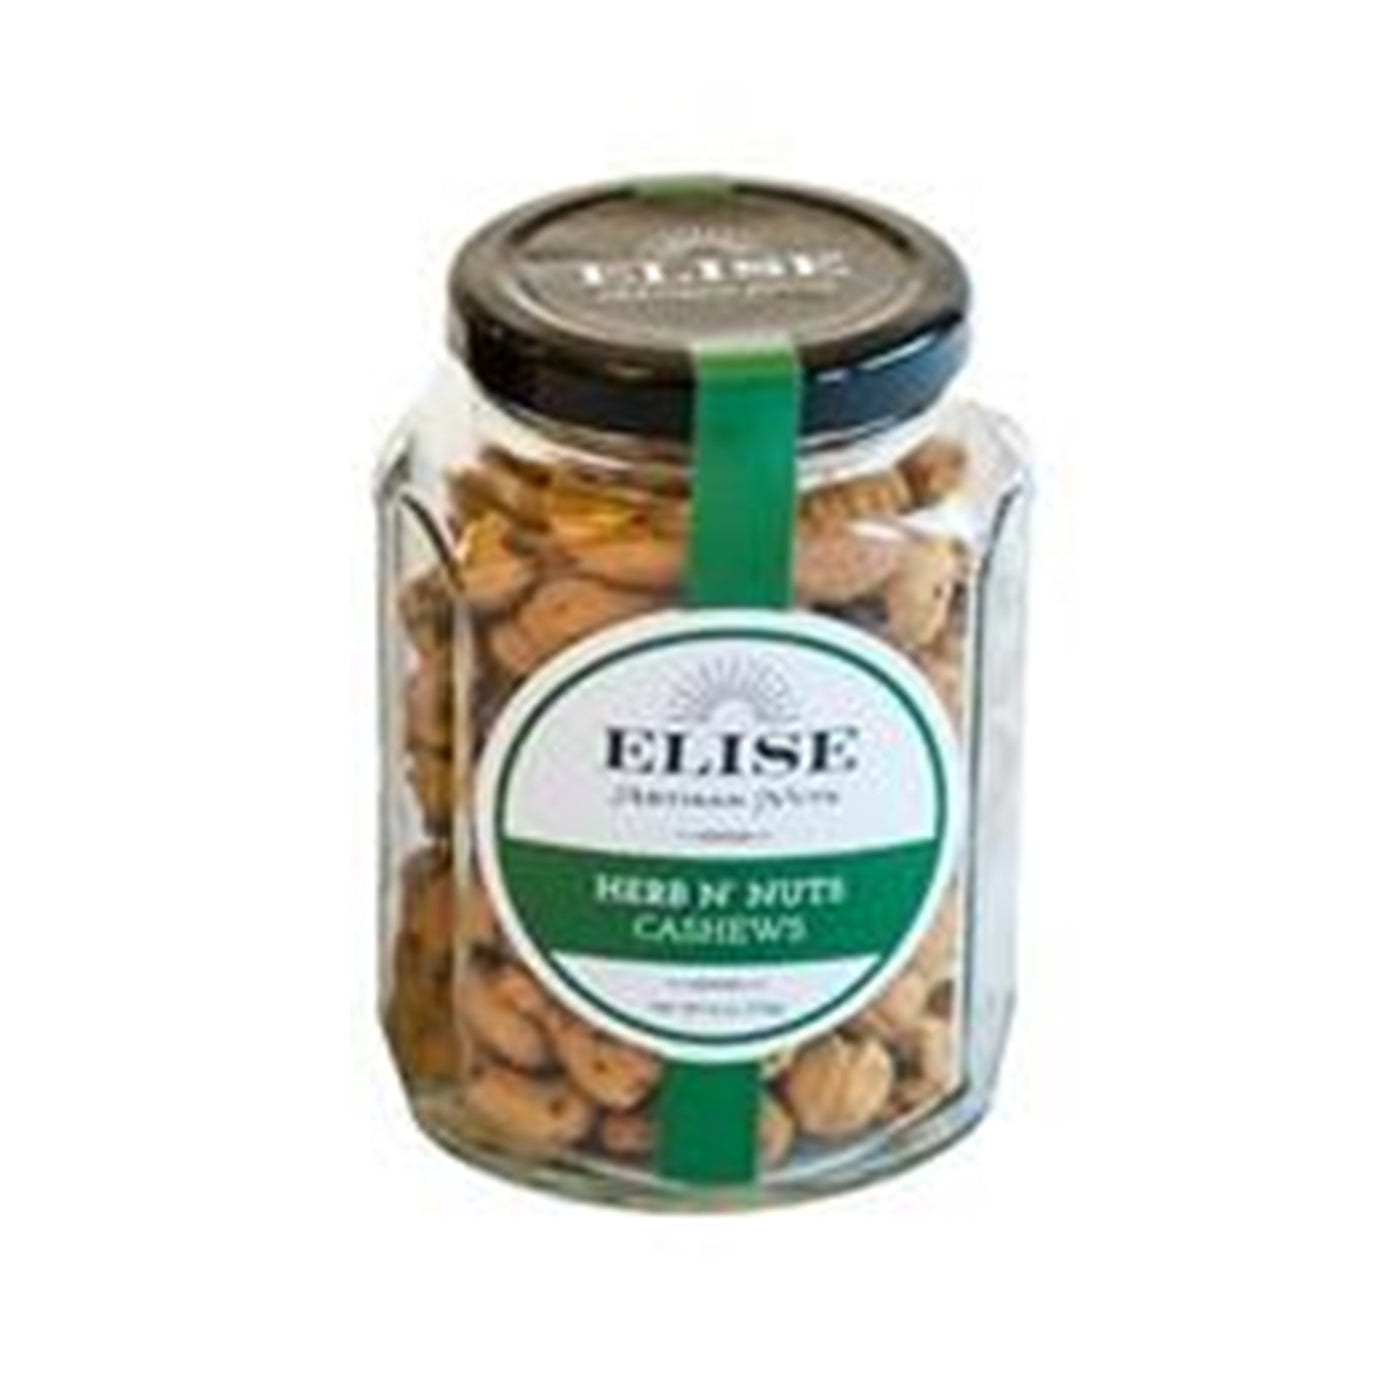 Herb n Nuts Cashews - 6-ounce Jar